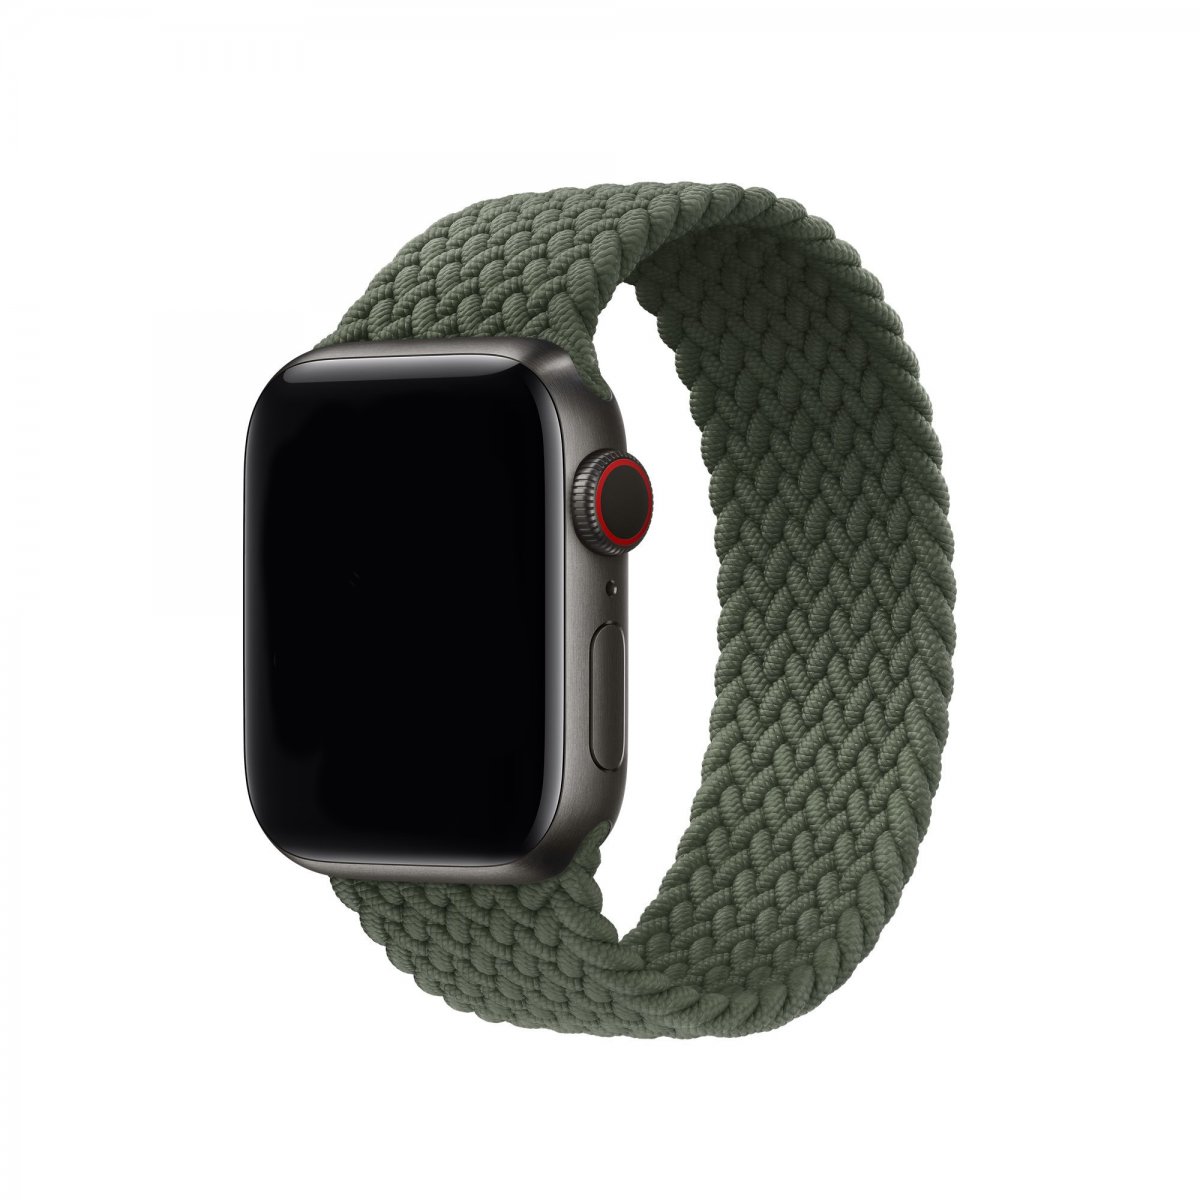 Řemínek iMore Braided Solo Loop Apple Watch Series 1/2/3 38mm - tmavě zelený (L)